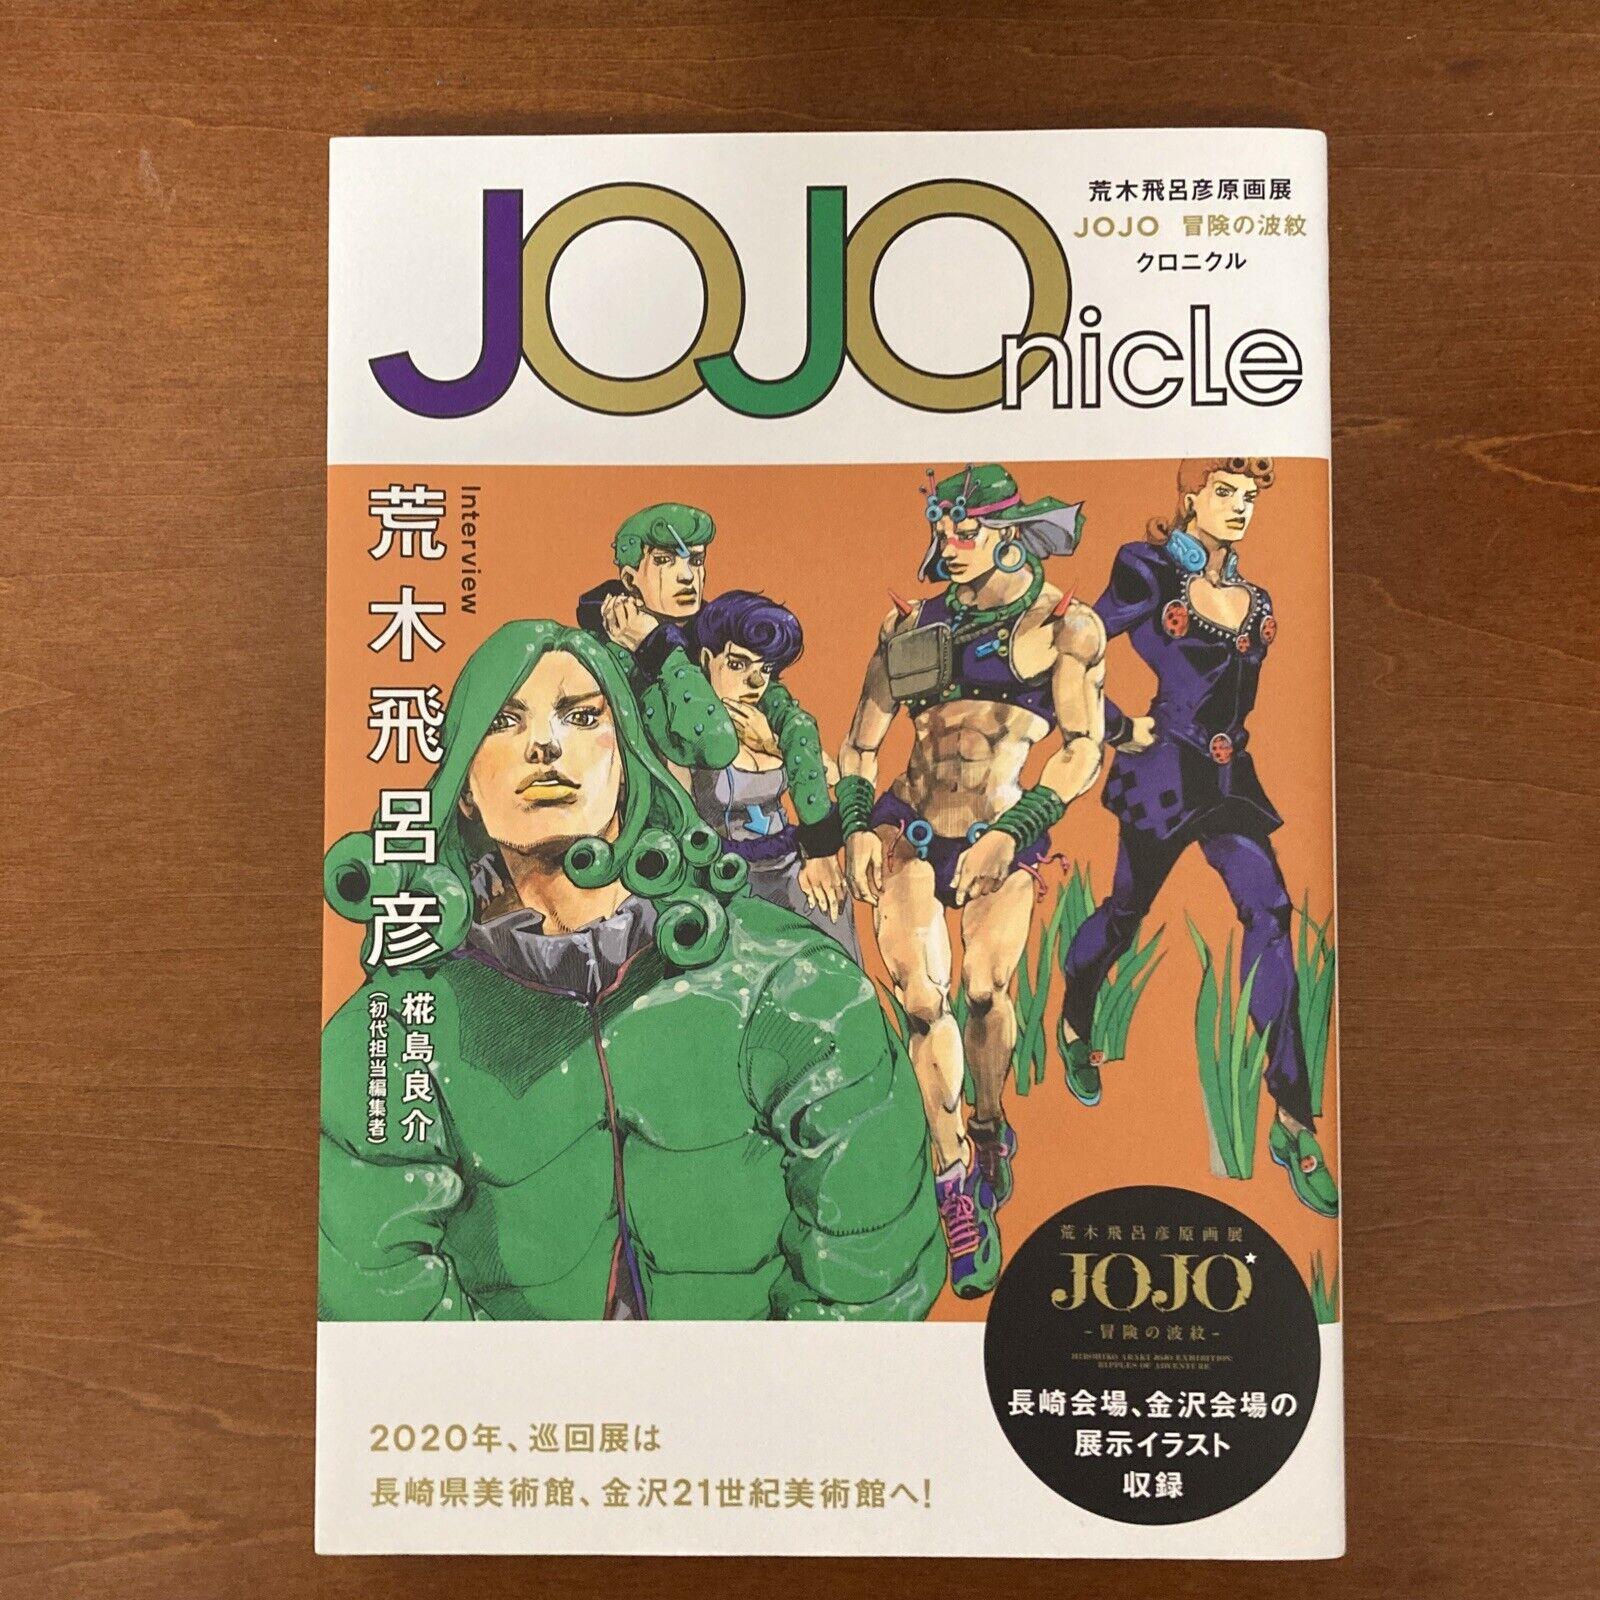 JOJOnicle Hirohiko Araki JoJo's Bizarre Adventure Official Art Book Illustration